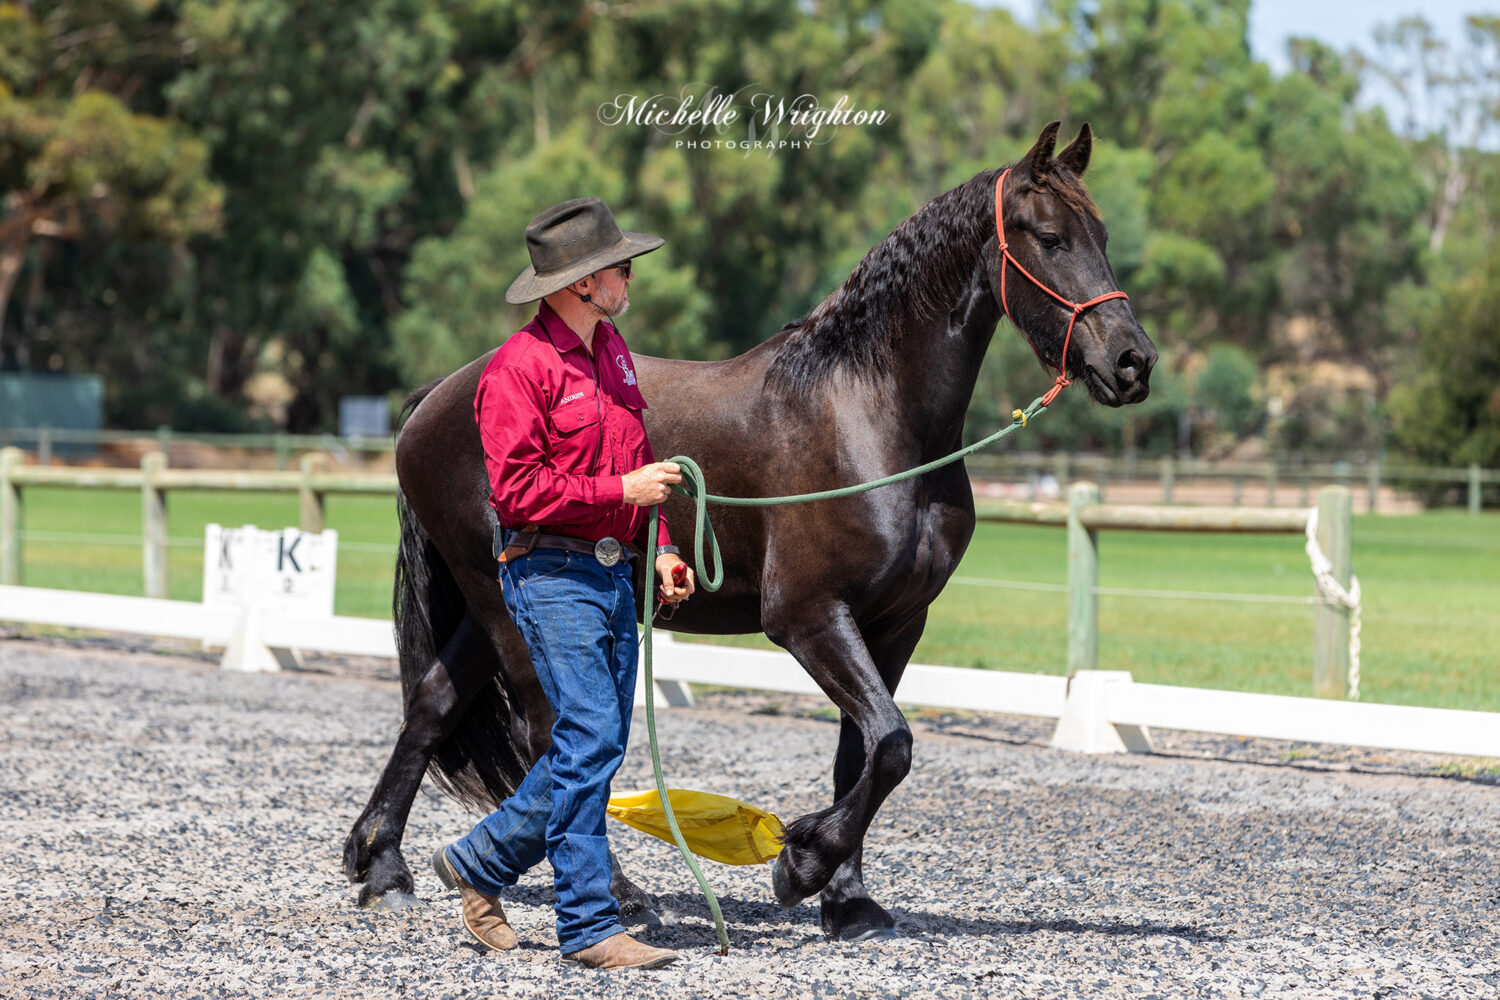 2019 Western Australia Friesian horse Keuring horsemanship display